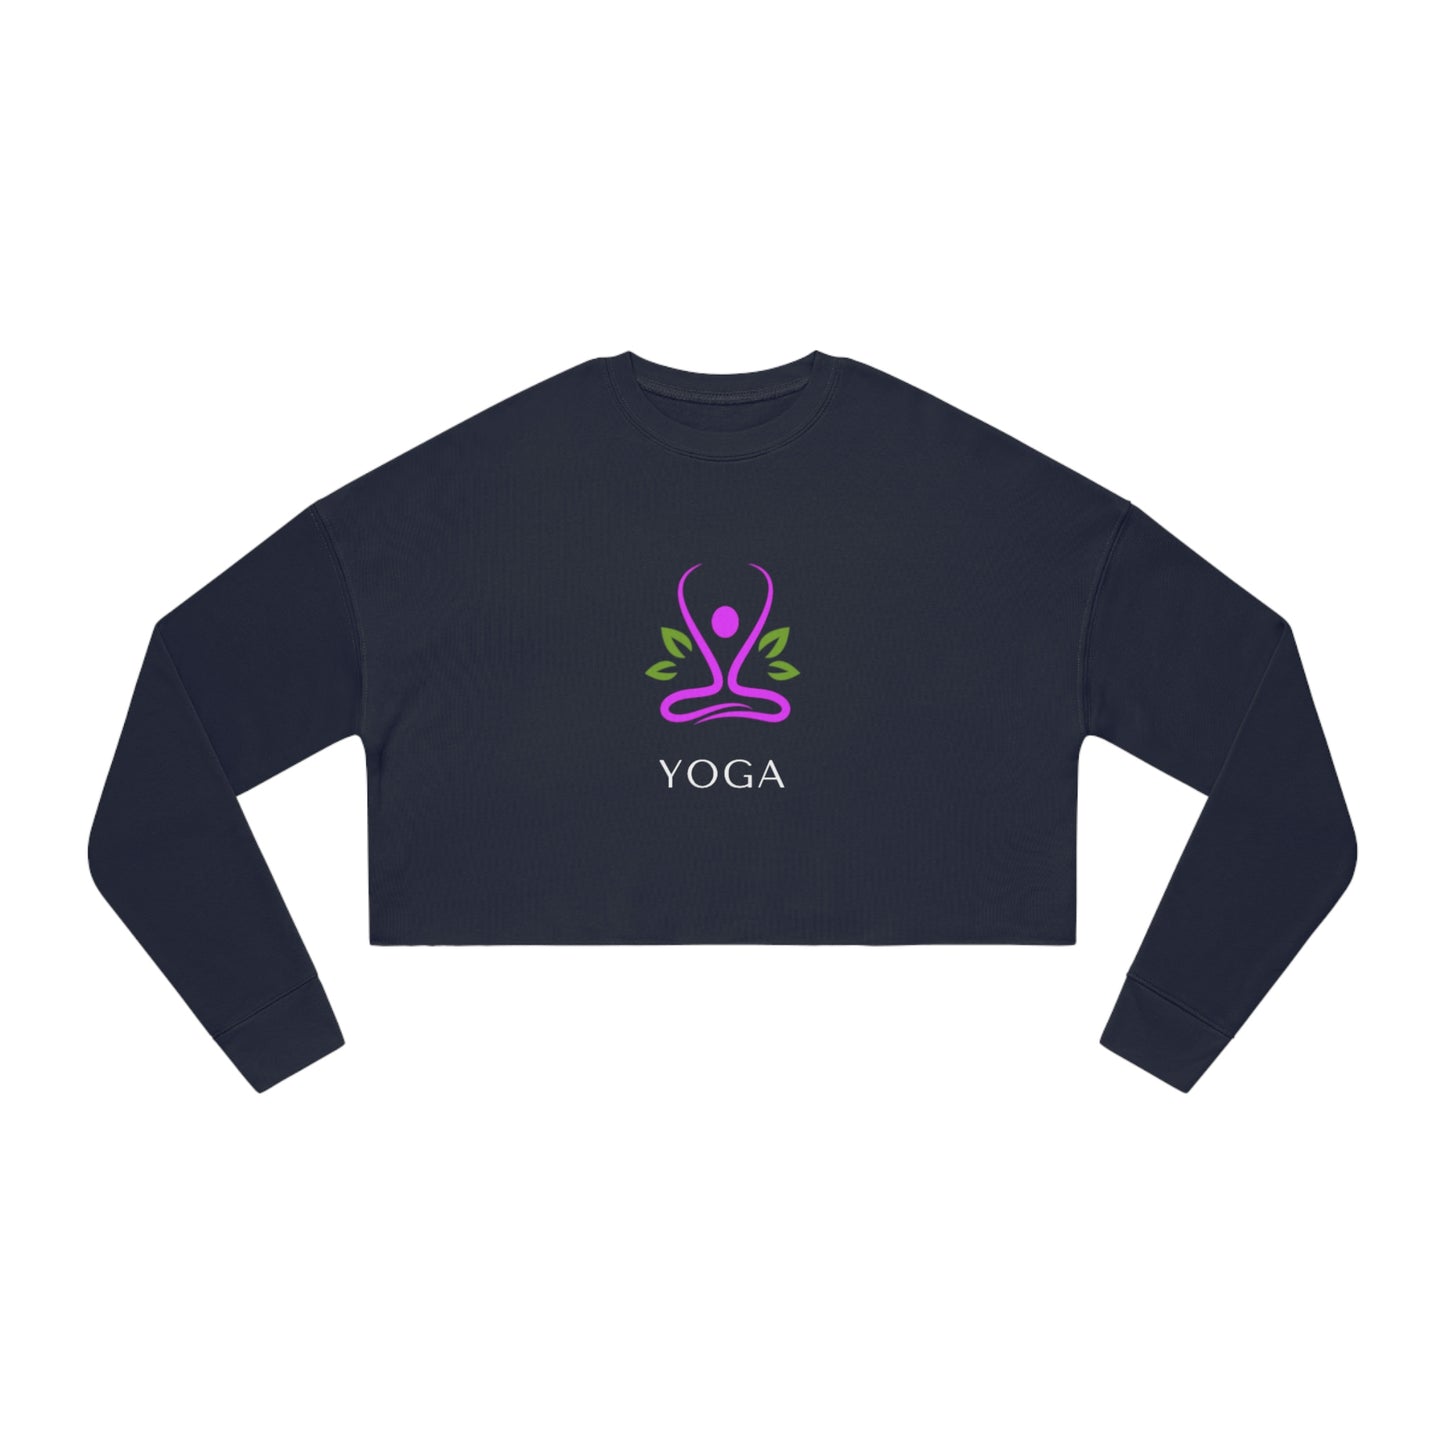 YOGA - Women's Cropped Sweatshirt